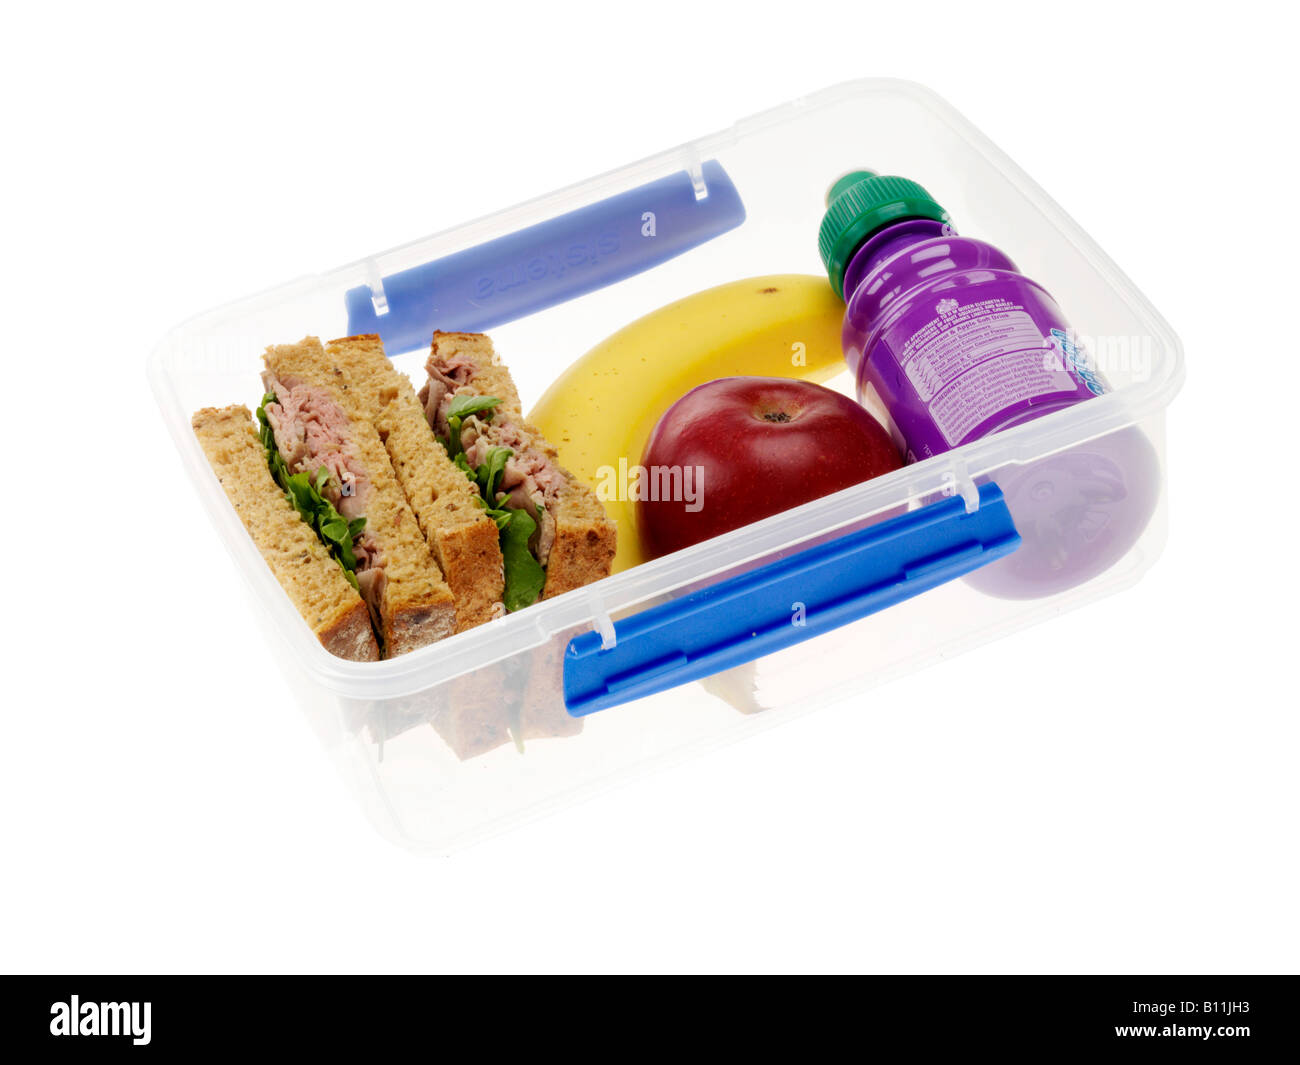 https://c8.alamy.com/comp/B11JH3/balanced-healthy-food-lunch-box-with-cut-sandwiches-fresh-fruit-and-B11JH3.jpg